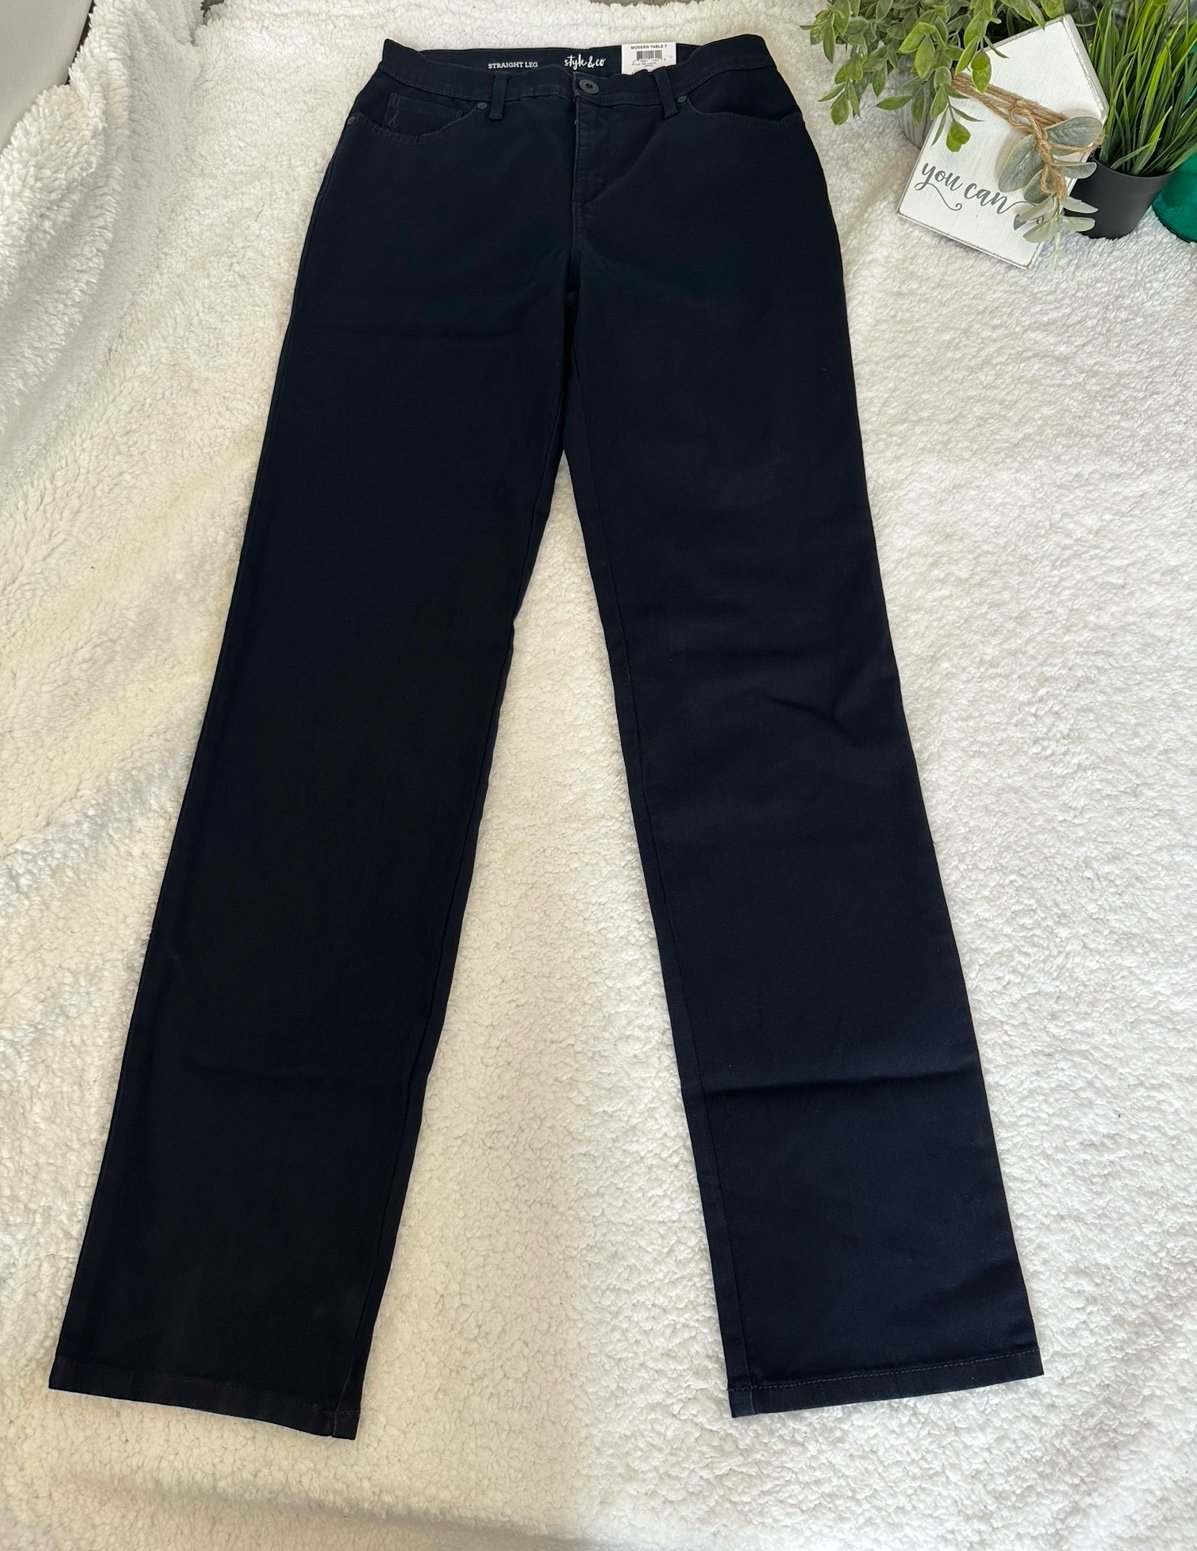 Wholesale price NWT. Women’s straight leg mid rise pants. Size 8 Long. J20yZlT55 New Style